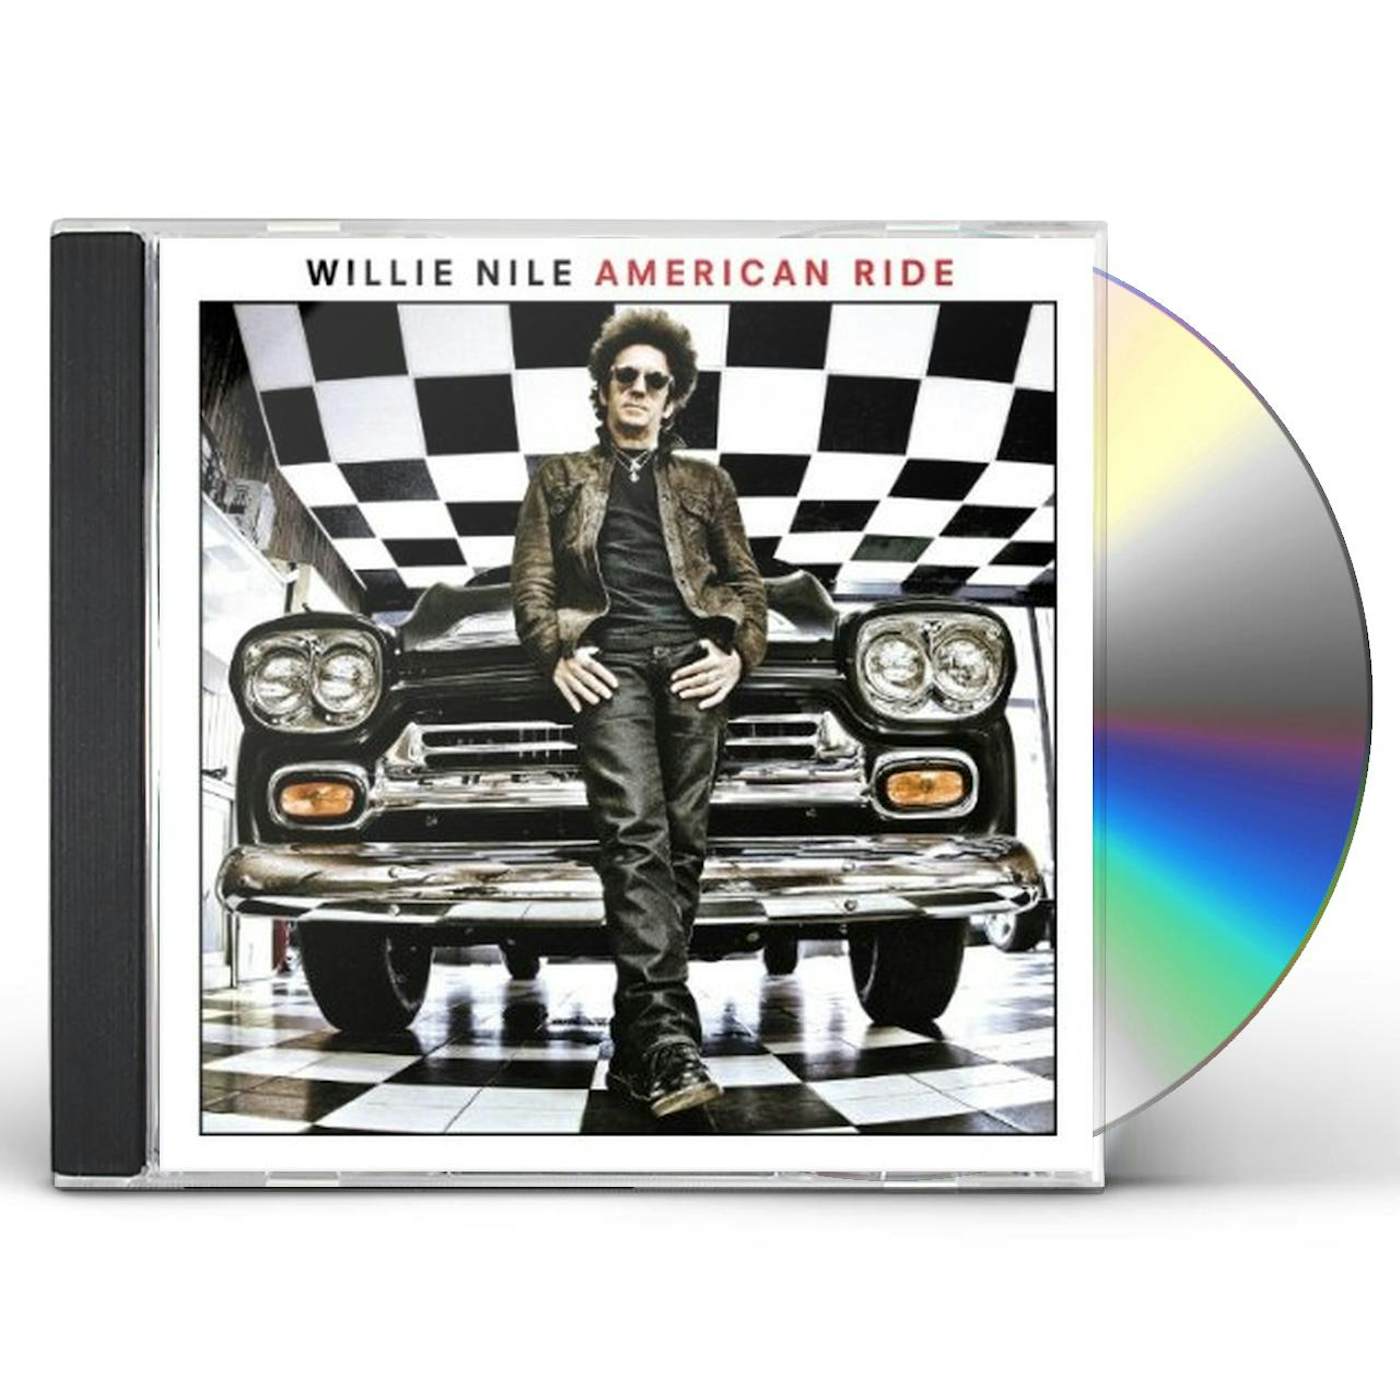 Willie Nile AMERICAN RIDE CD